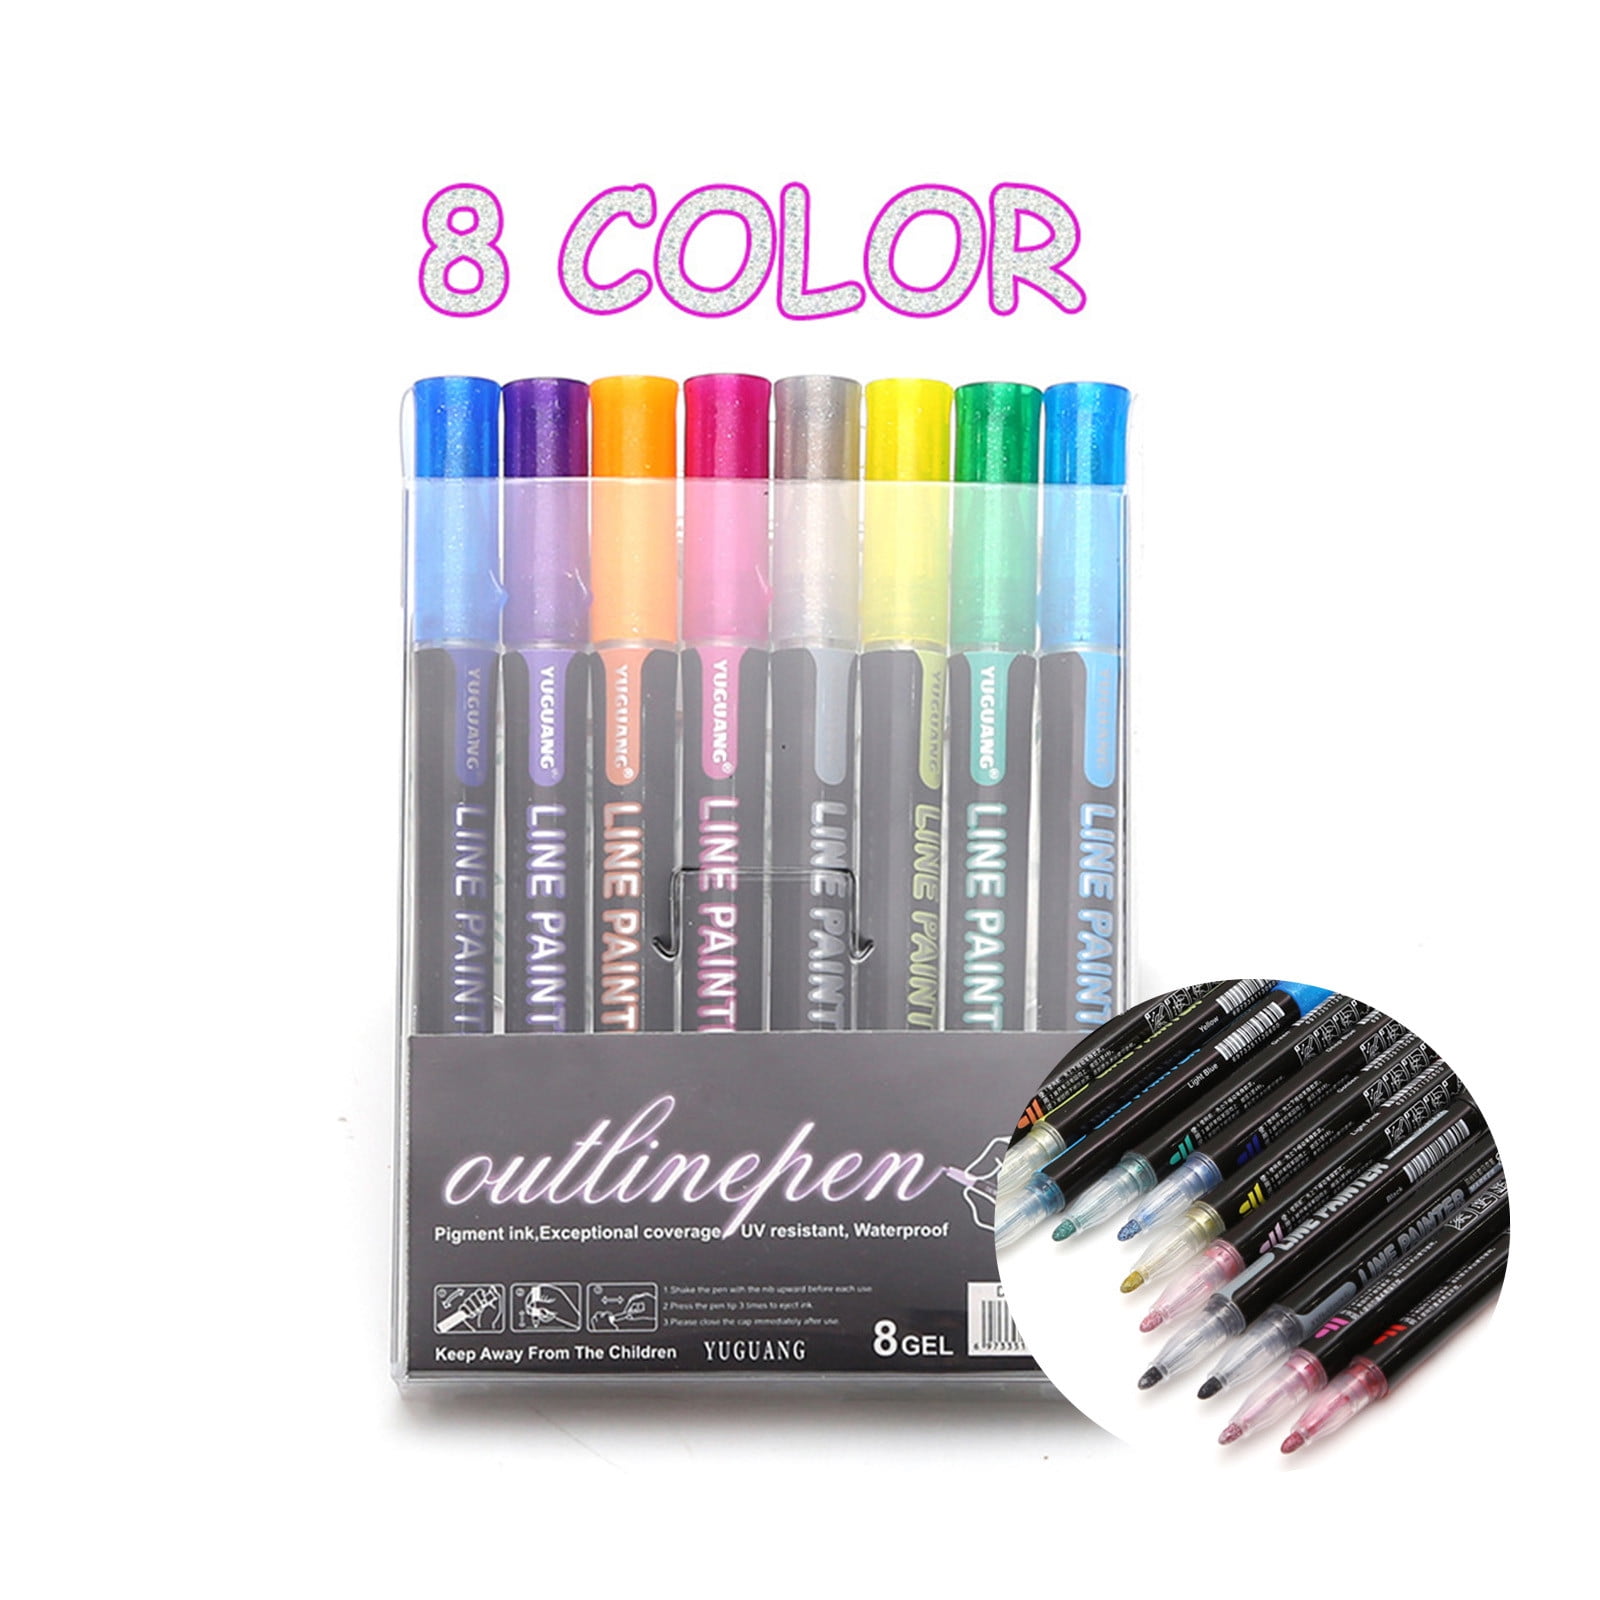 Metallic Marker Pens, XSG markers Set of 10 Colors India